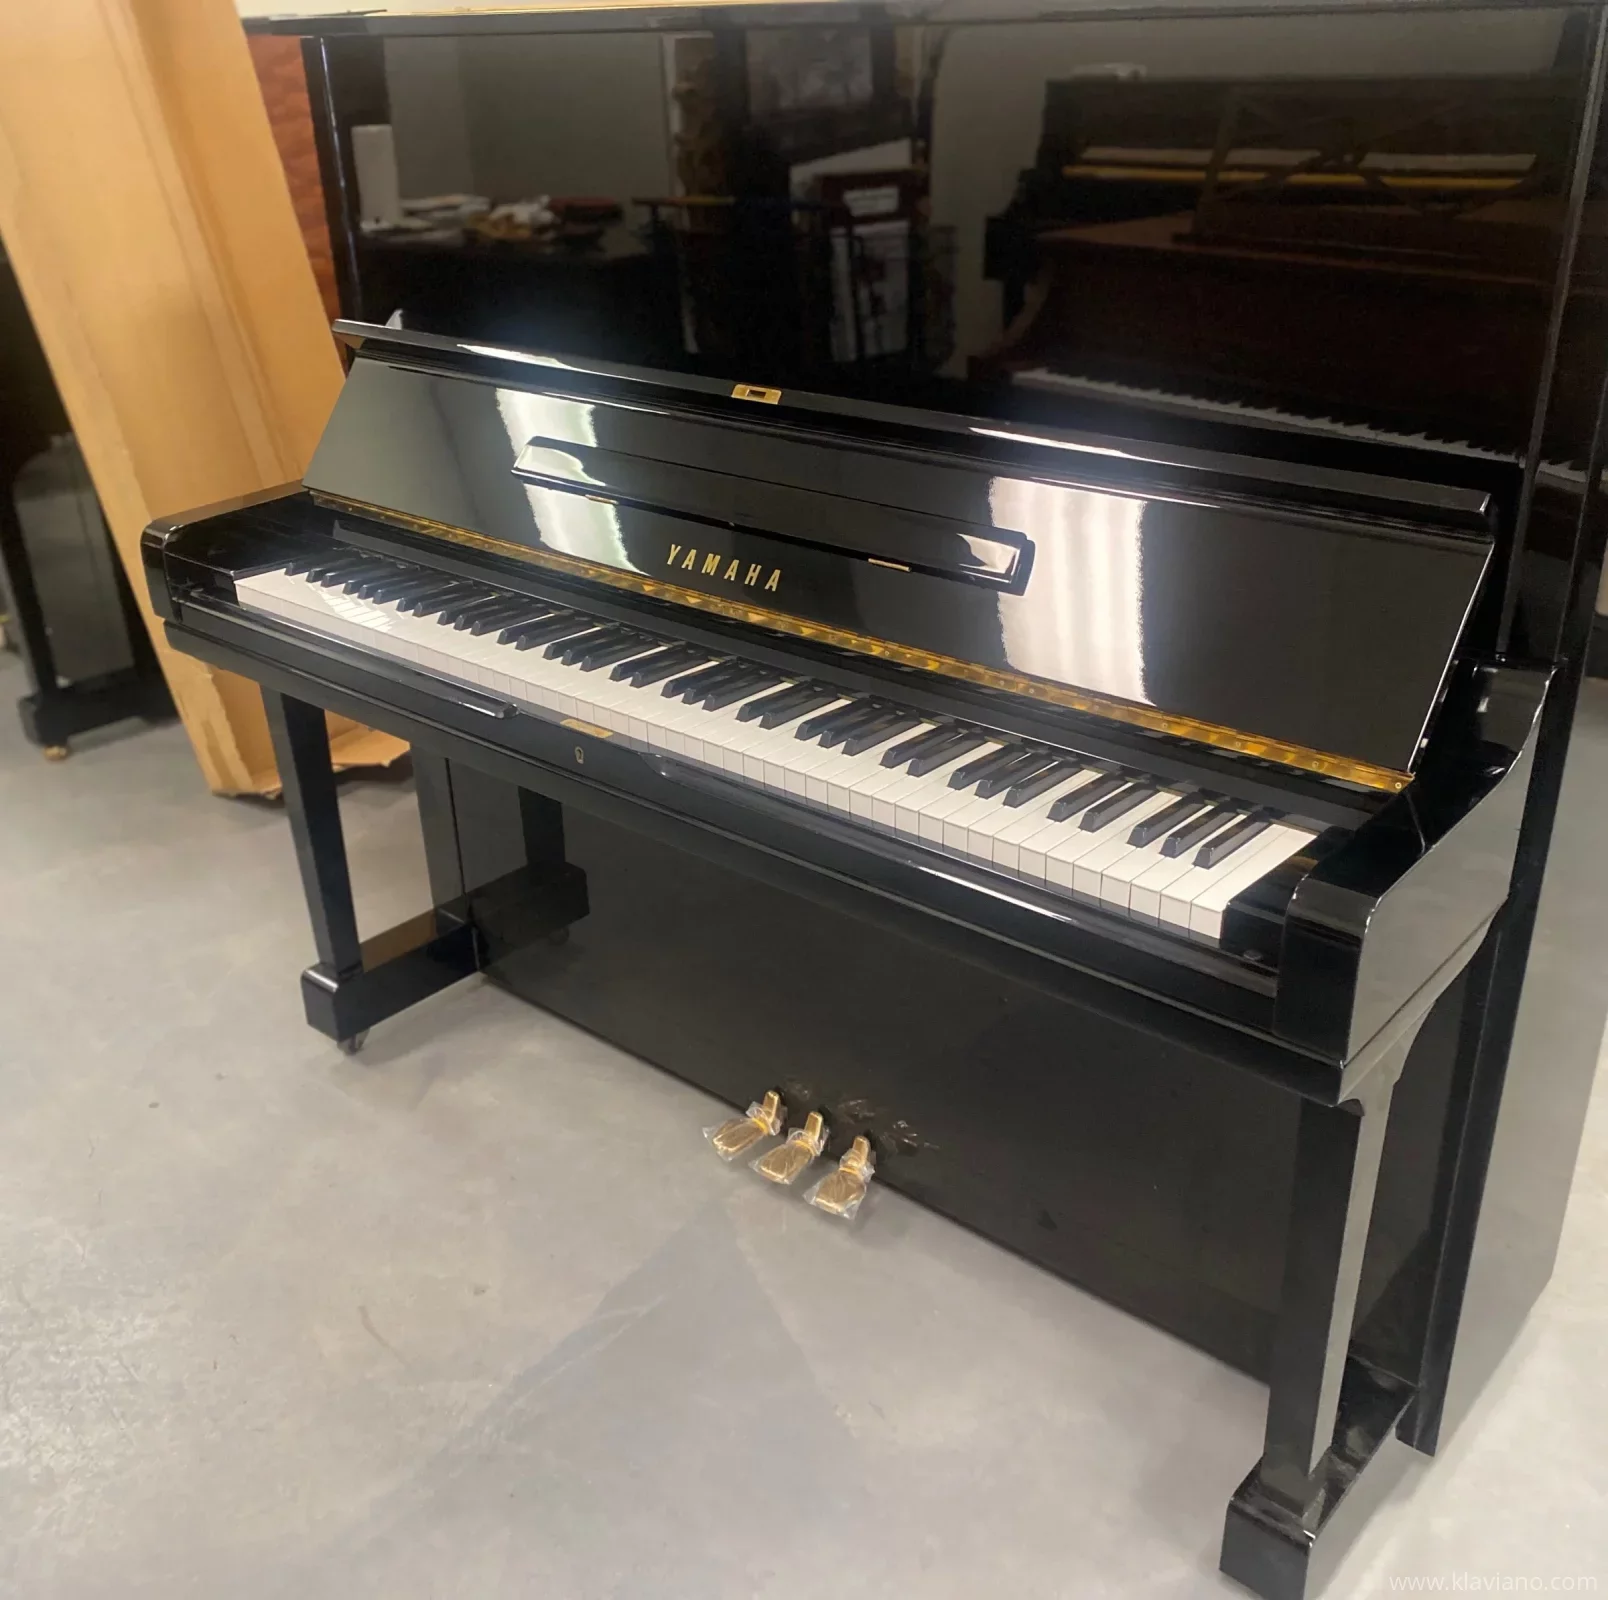 Yamaha U3 Professional Studio Pianos - Free Delivery Within 1000 Miles Of Atlanta!